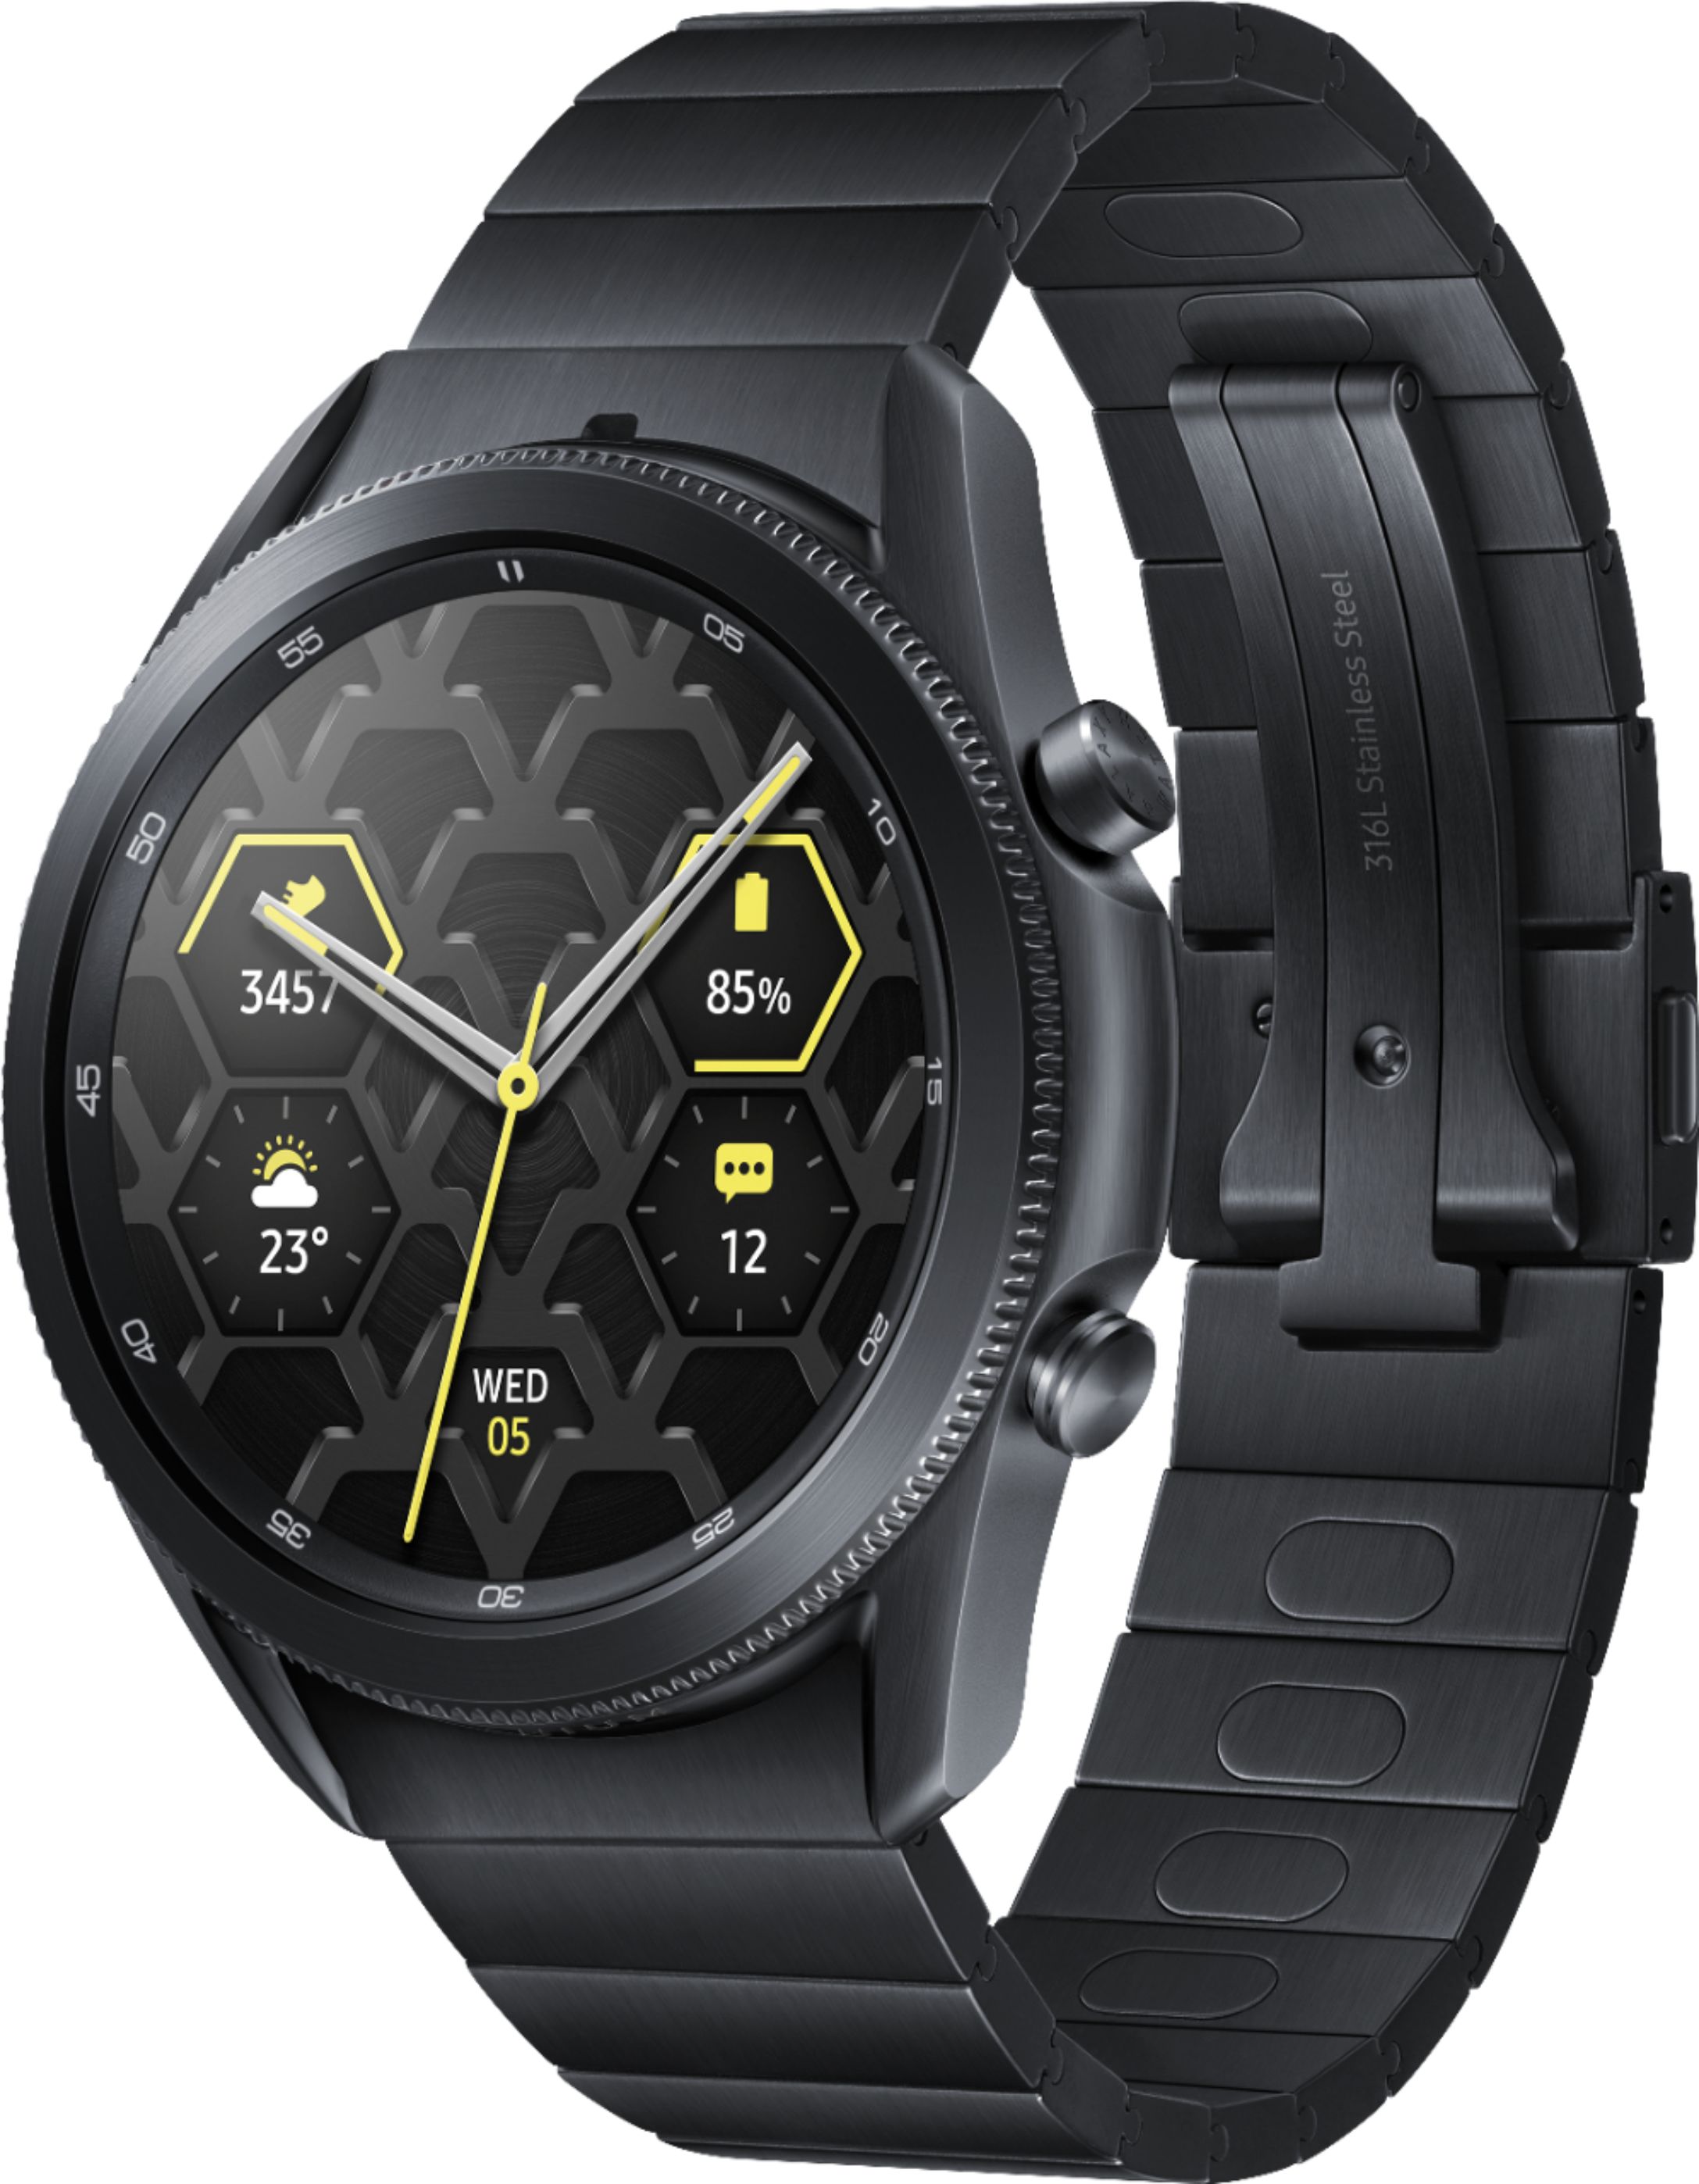 ÎÎµÏÎ¼Î¿ÎºÎ®ÏÎ¹Î¿ ÏÏÎ­Î¼Î¼Î± Î¼ÎµÏÎ·Î¼Î­ÏÎ¹ smartwatch titanium Î¼ÎµÏÎ¬Î»Î»ÎµÏÎ¼Î± ÎÏÏÏÎ·ÏÏÏ Î Î·Î³Î®